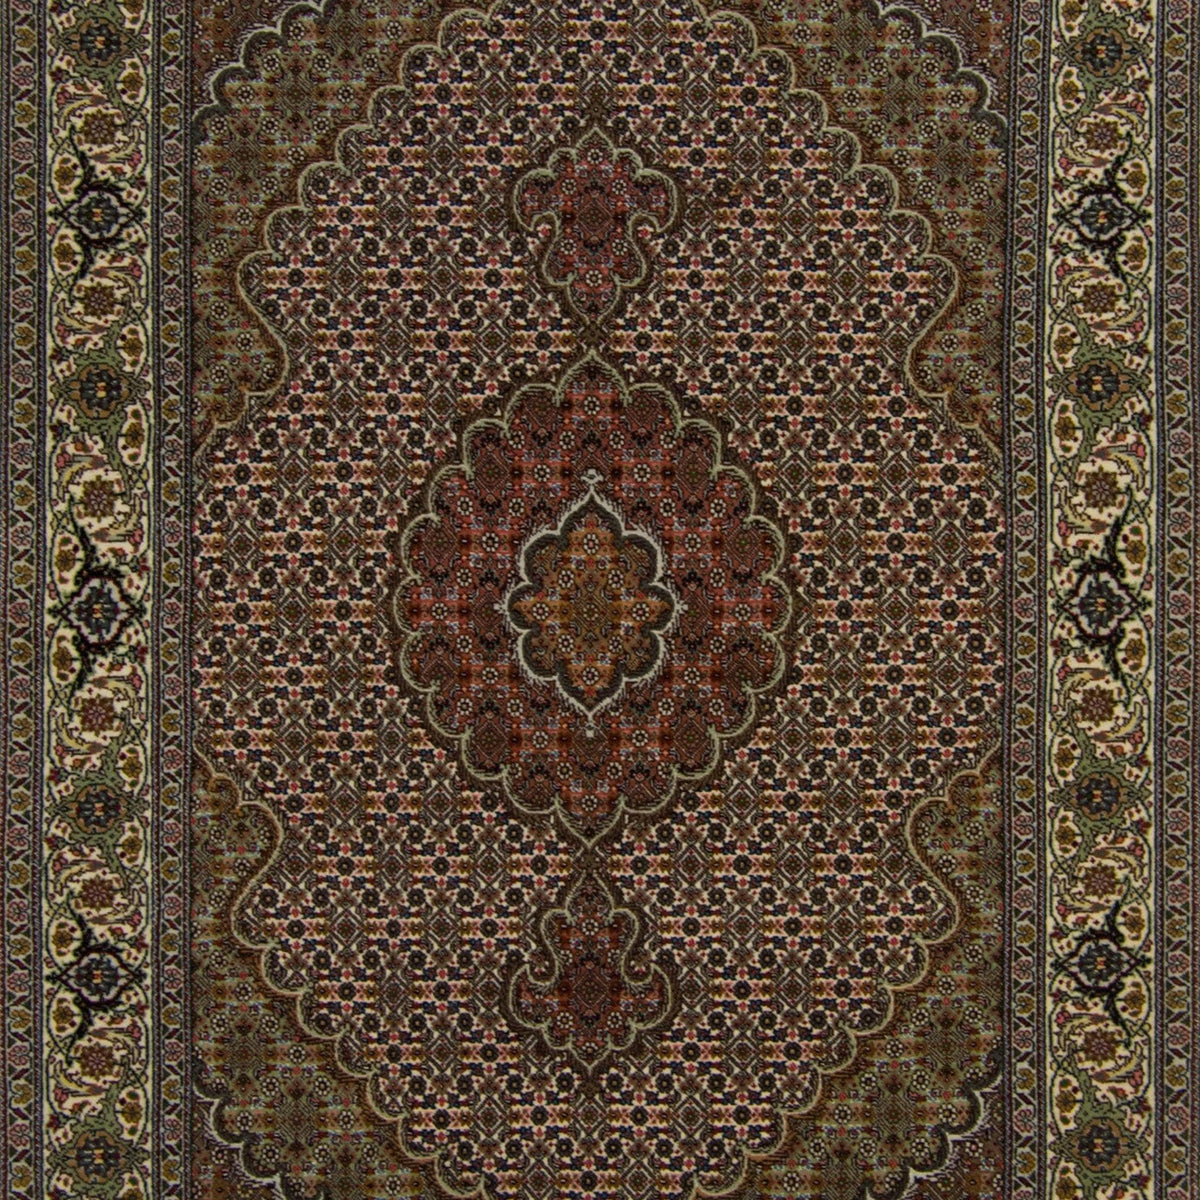 Fine Hand-knotted Persian Wool and Silk Tabriz - Mahi Design Rug 109cm x 148cm